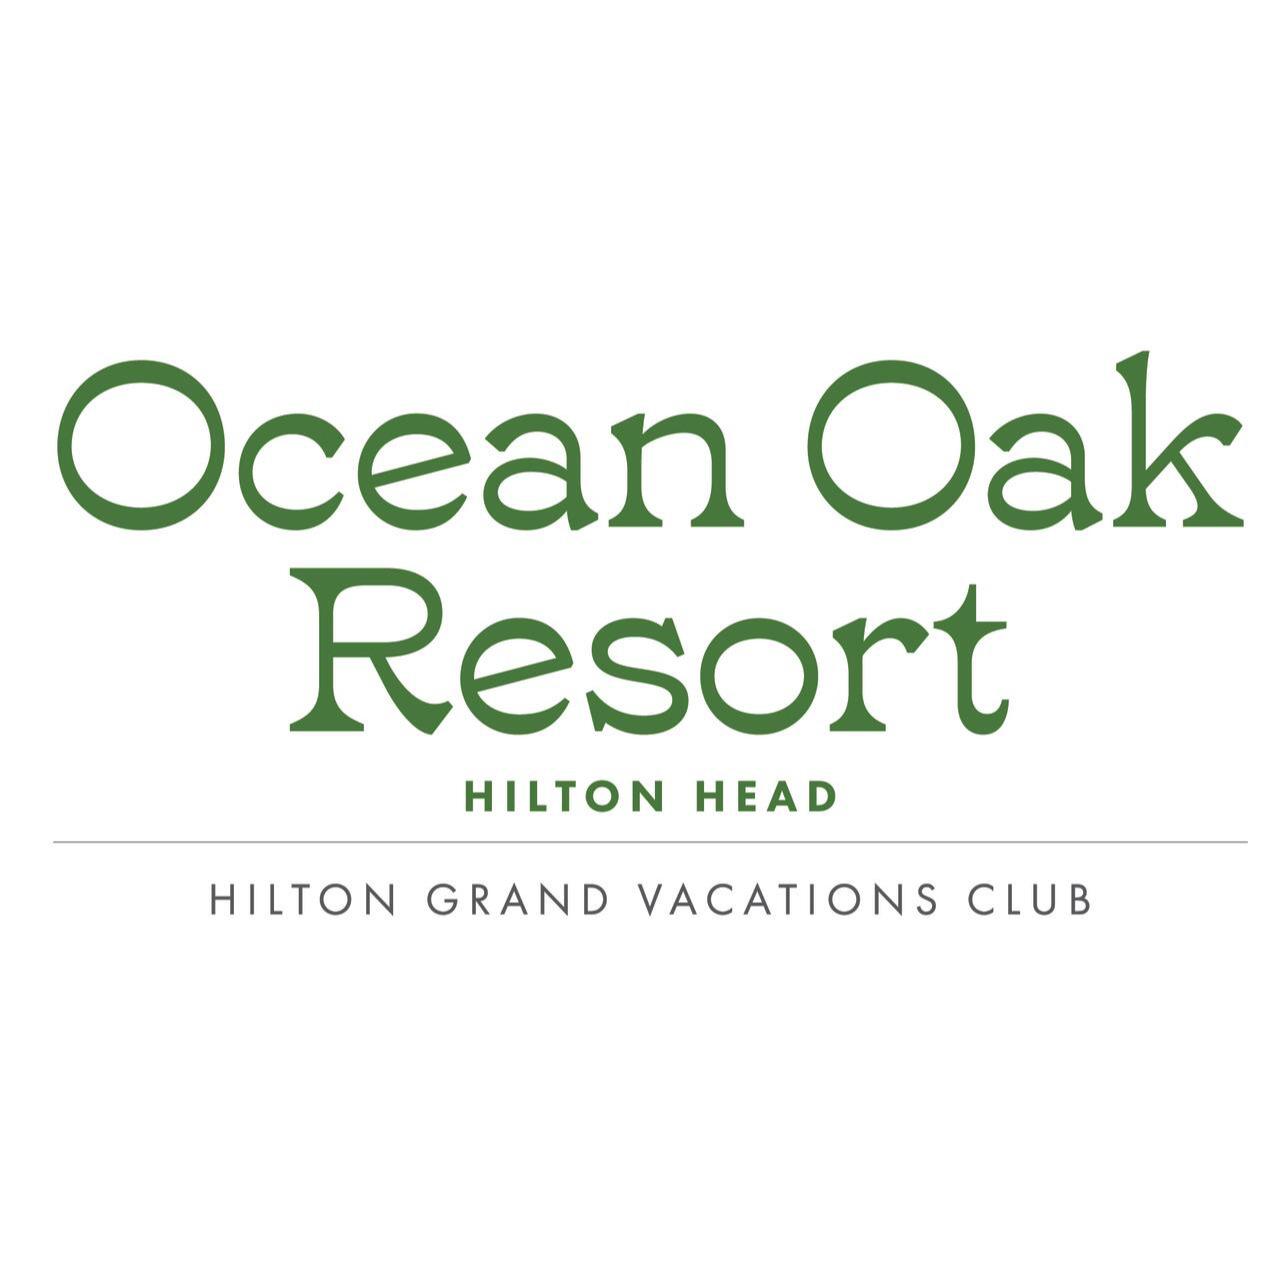 Hilton Grand Vacations Club Ocean Oak Resort Hilton Head - Hilton Head Island, SC 29928 - (843)342-8400 | ShowMeLocal.com